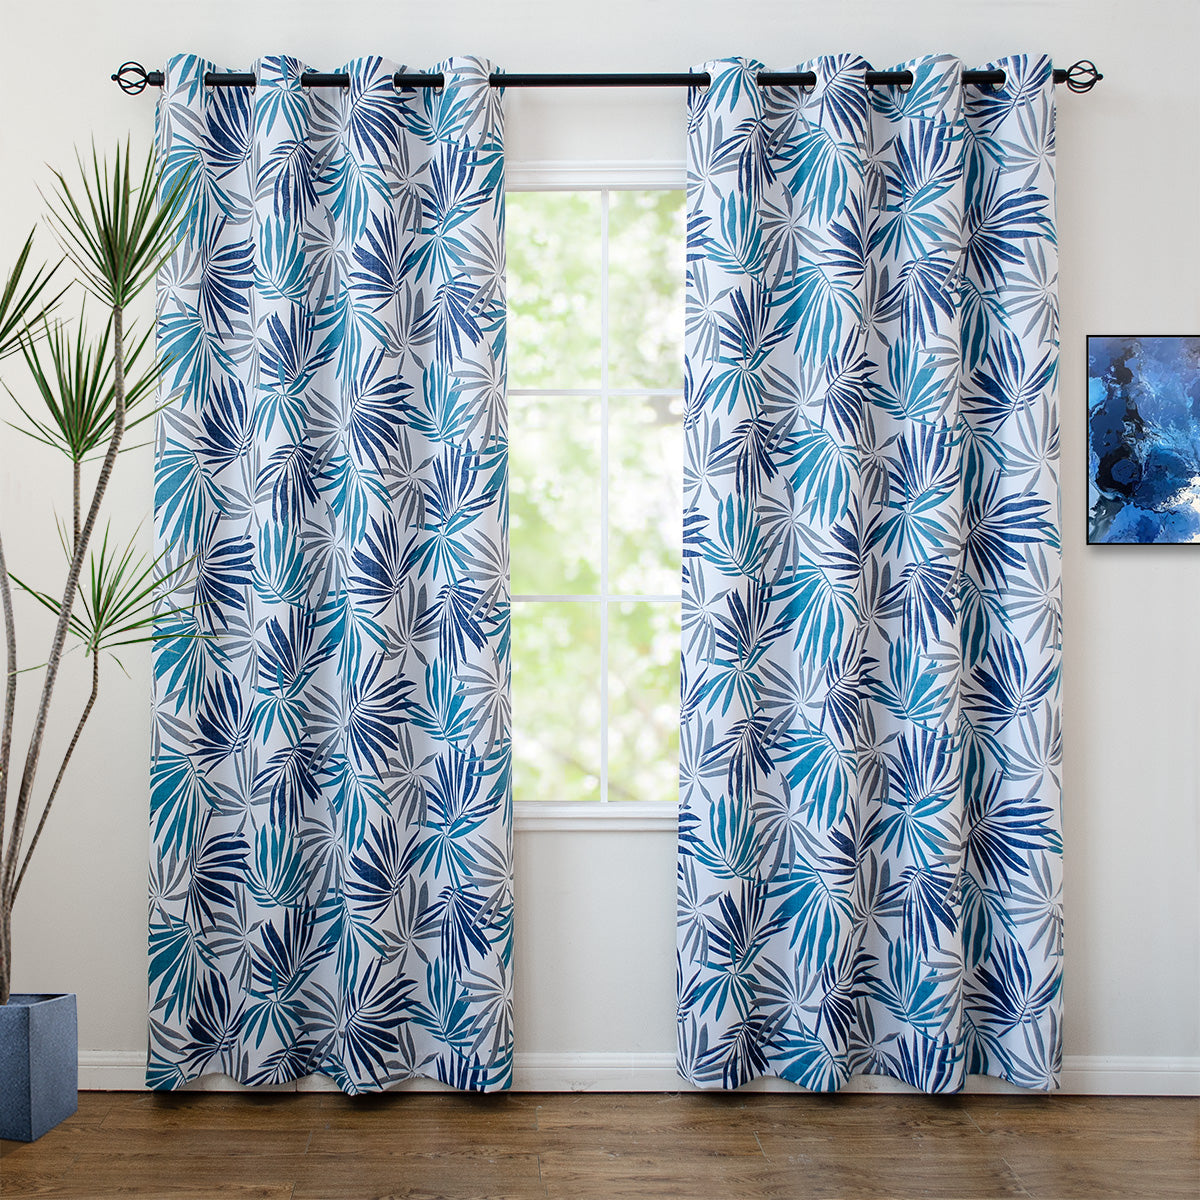 Linentalks Navy Blue Blackout Curtains For Bedroom Living Room Grom Home